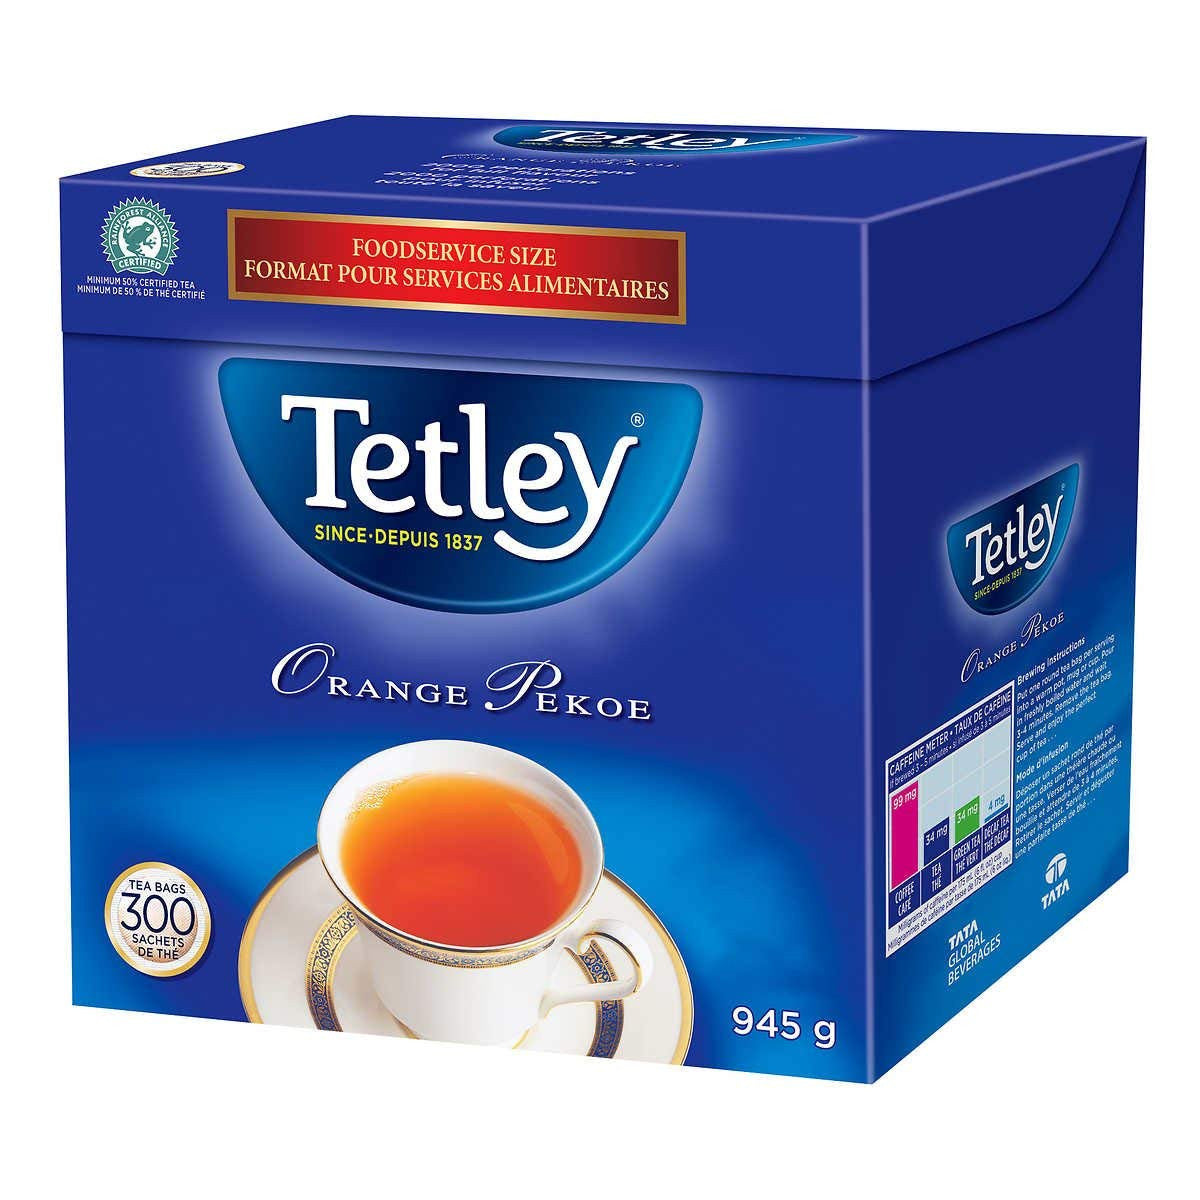 Tetley Tea Orange Pekoe Food Service Size 300ct/945g Tea Bags (3pk) {Imported from Canada}